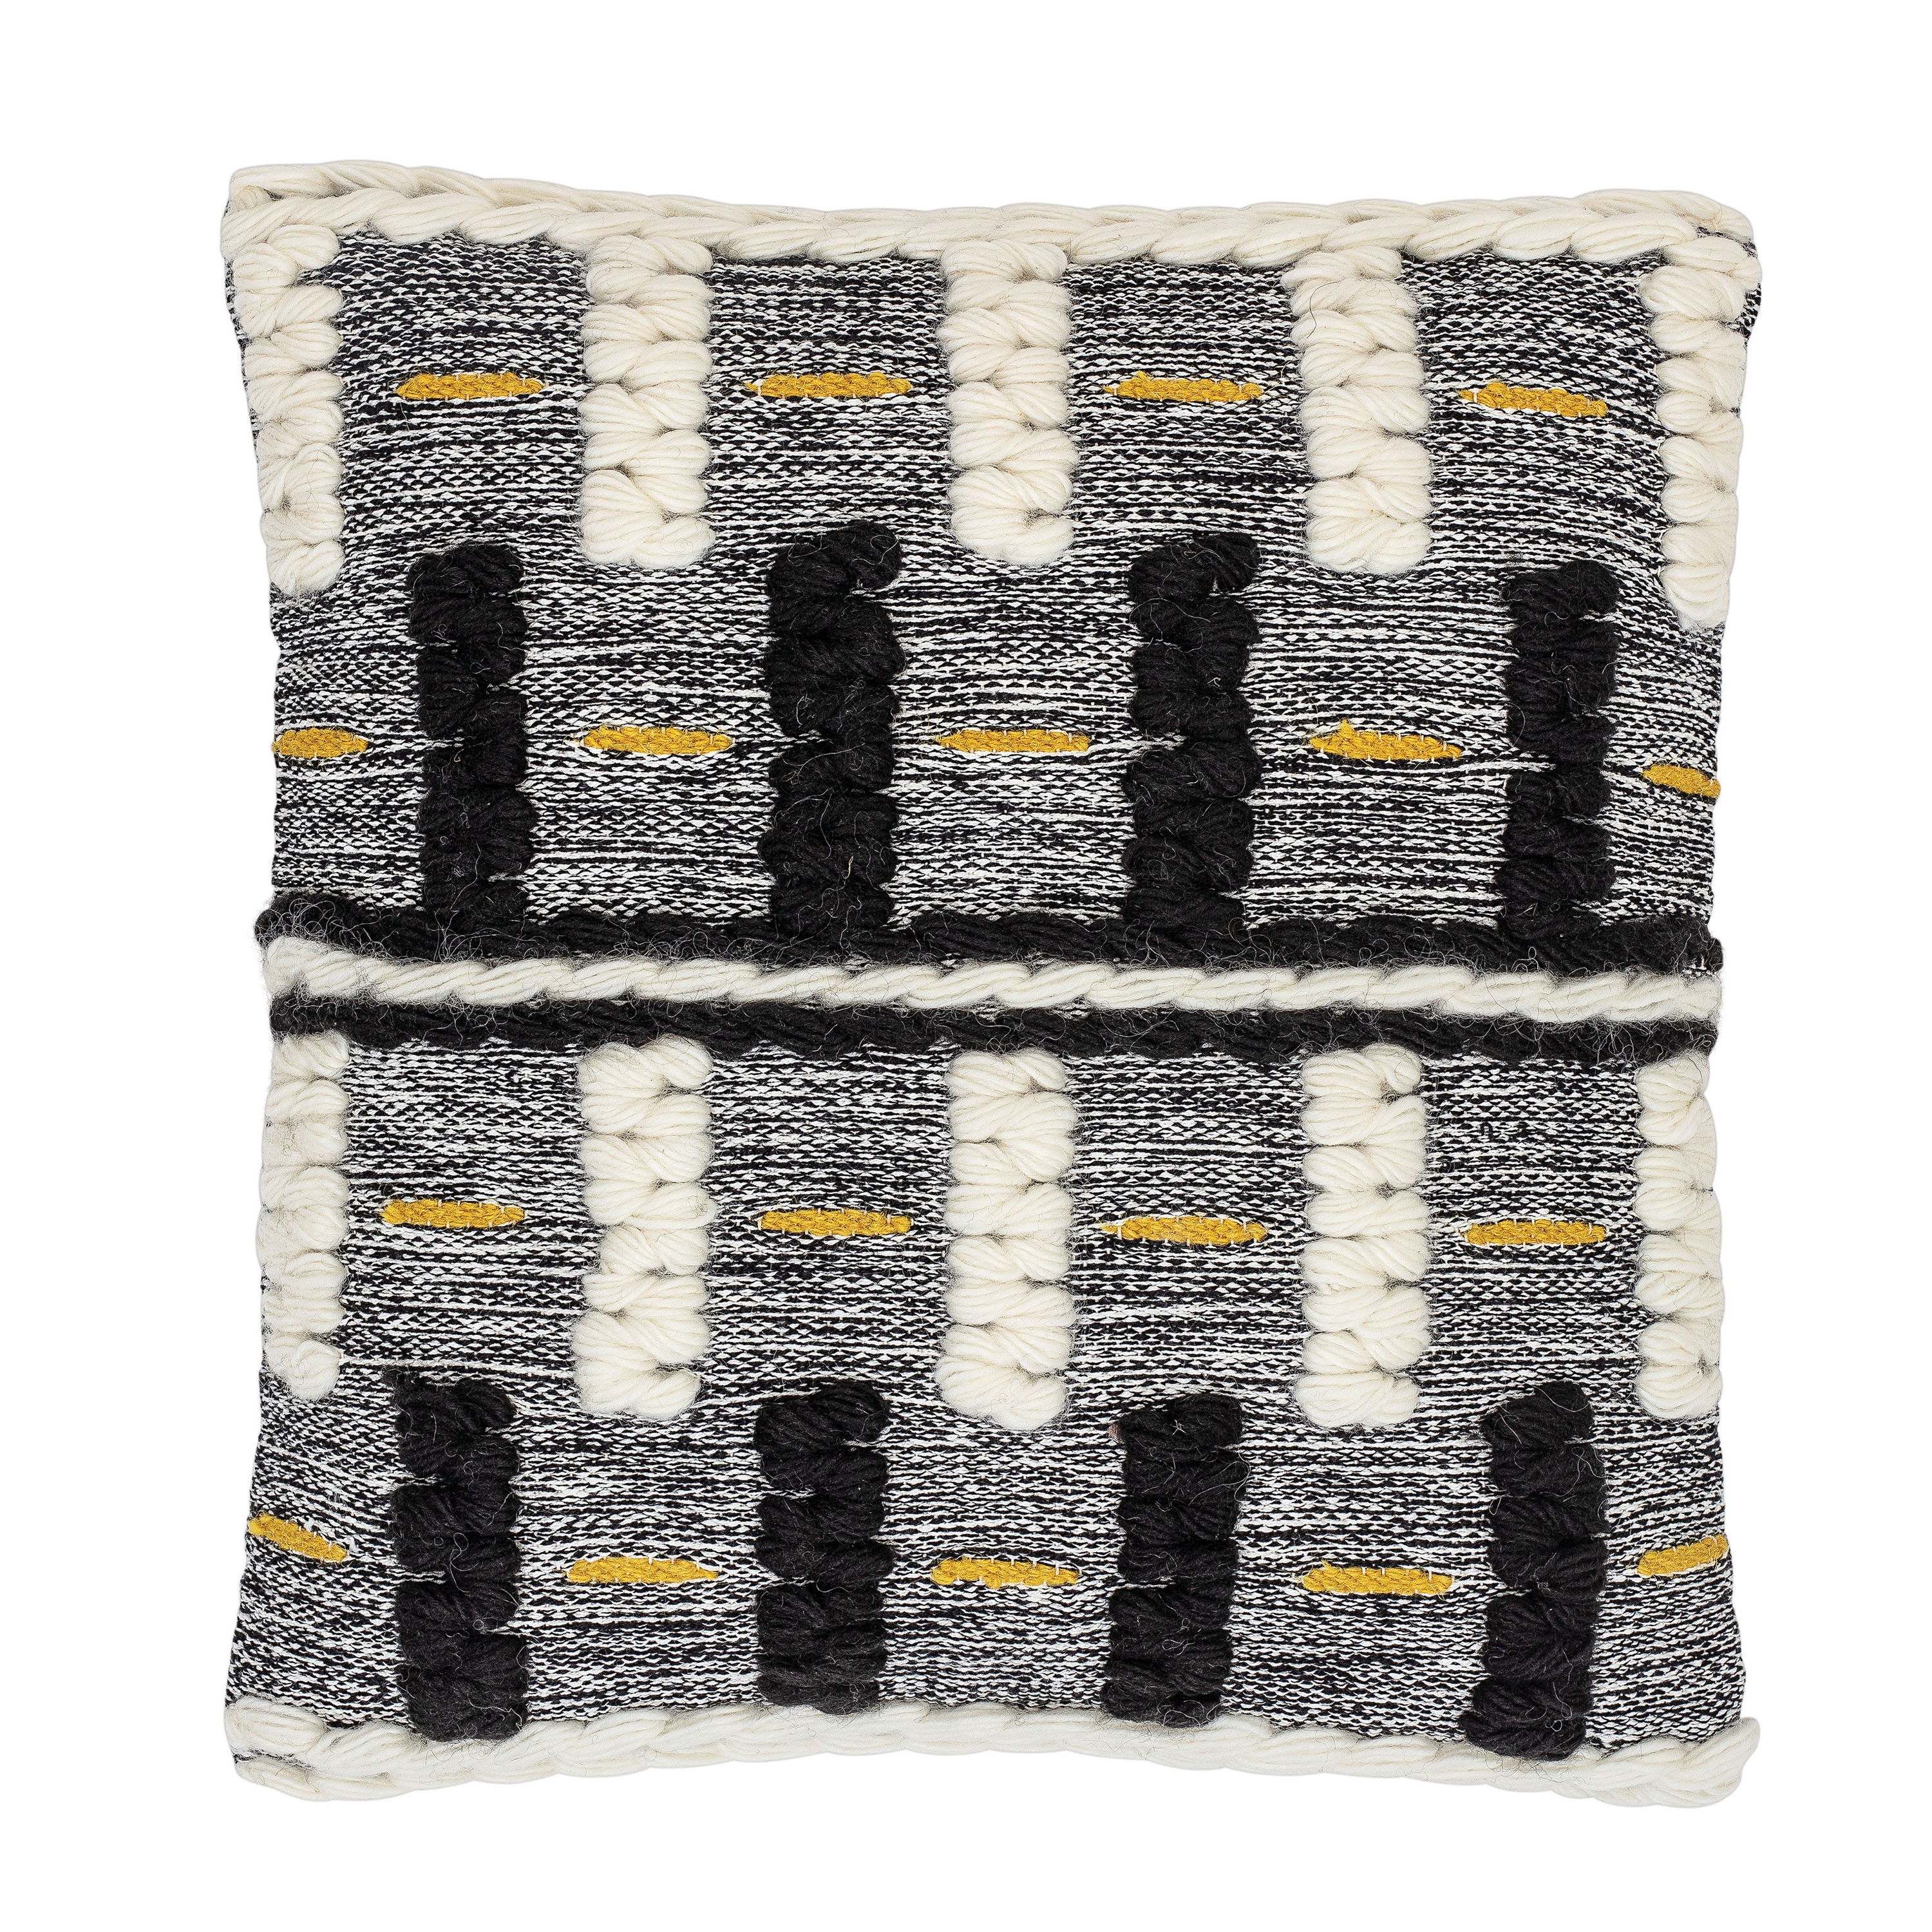 Woven Wool Blend Throw Pillow, Black, White & Yellow, 20" x 20" - Image 0